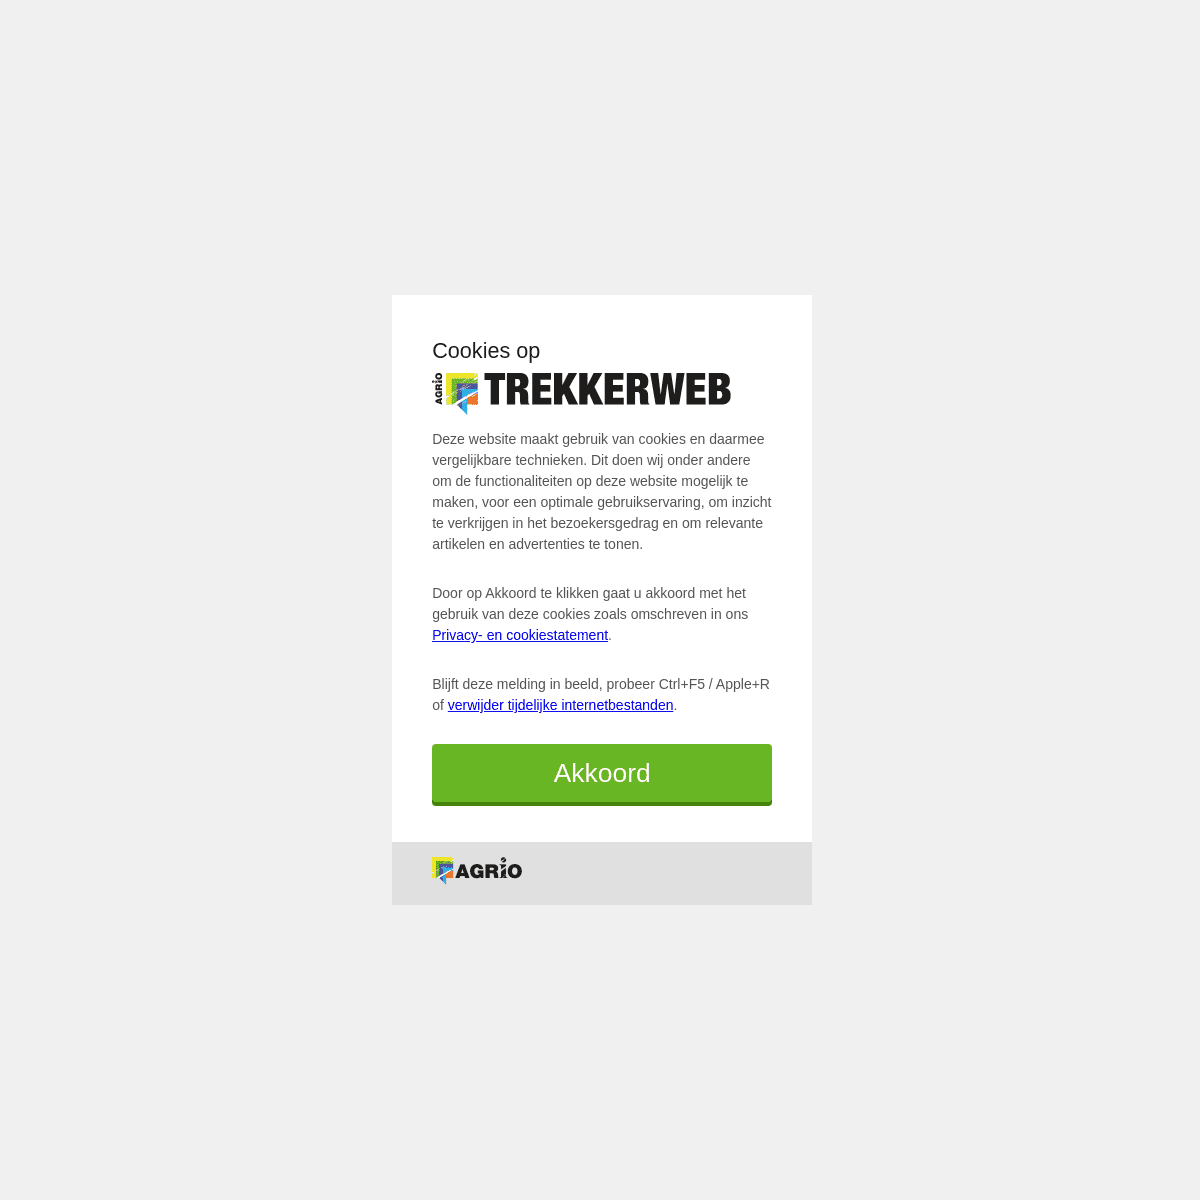 A complete backup of trekkerweb.nl